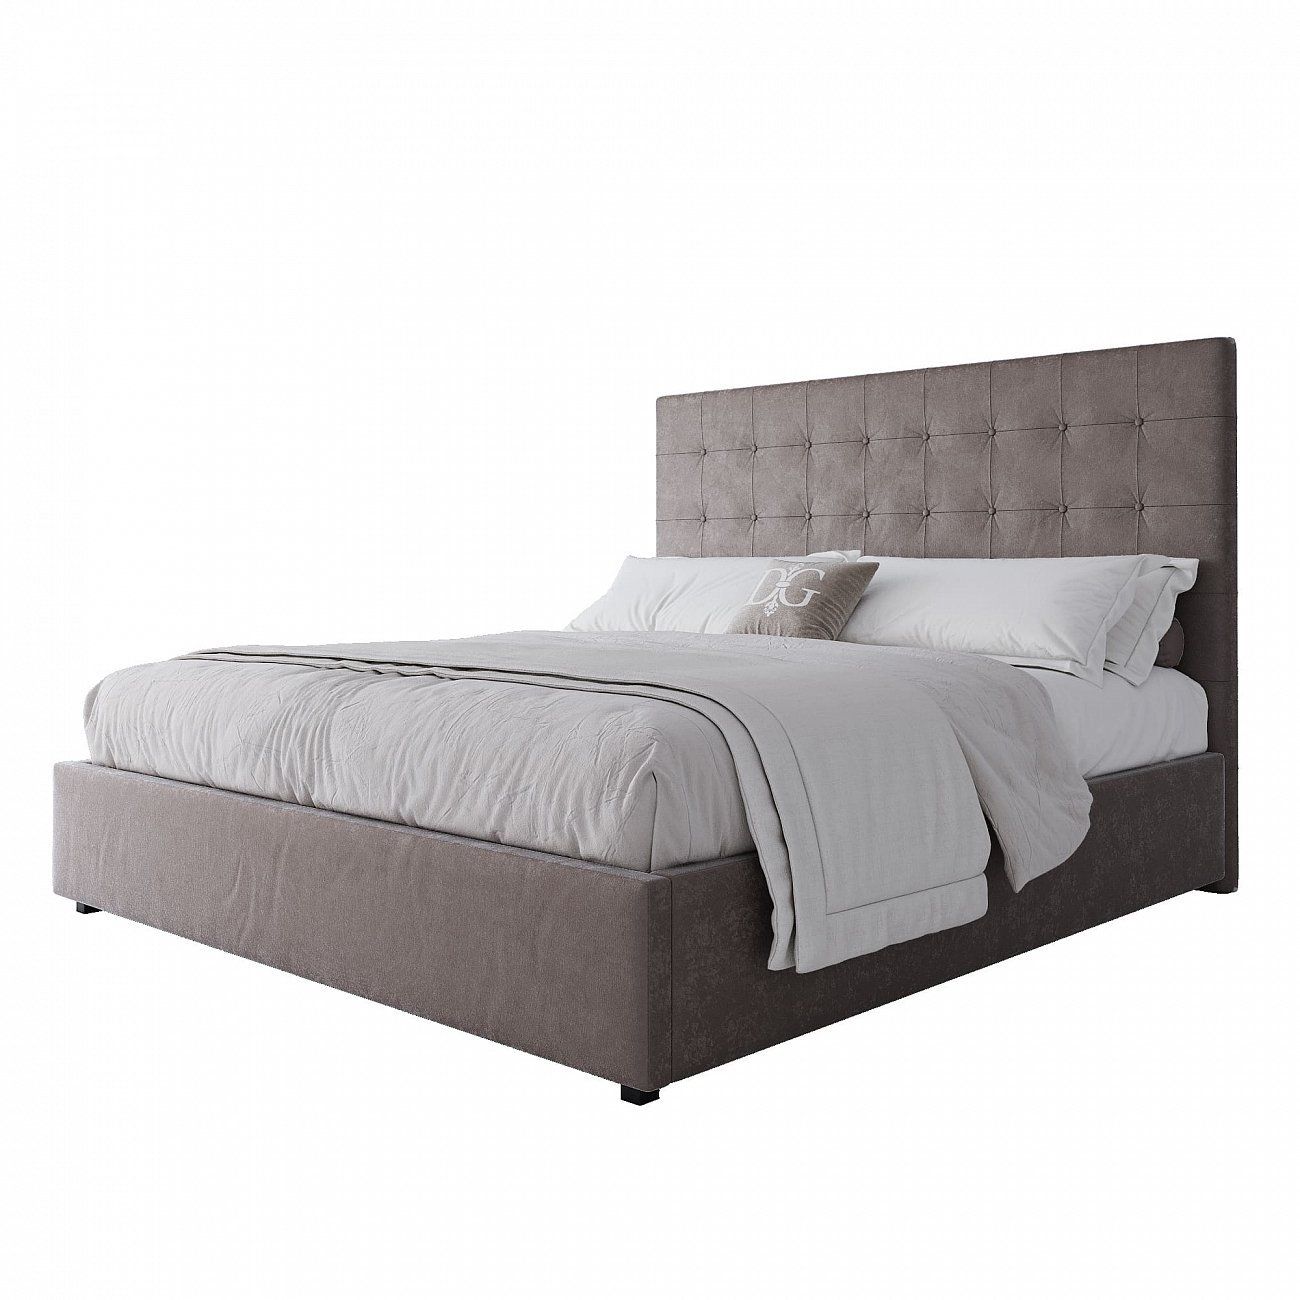 Double bed 180x200 cm light brown Royal Black